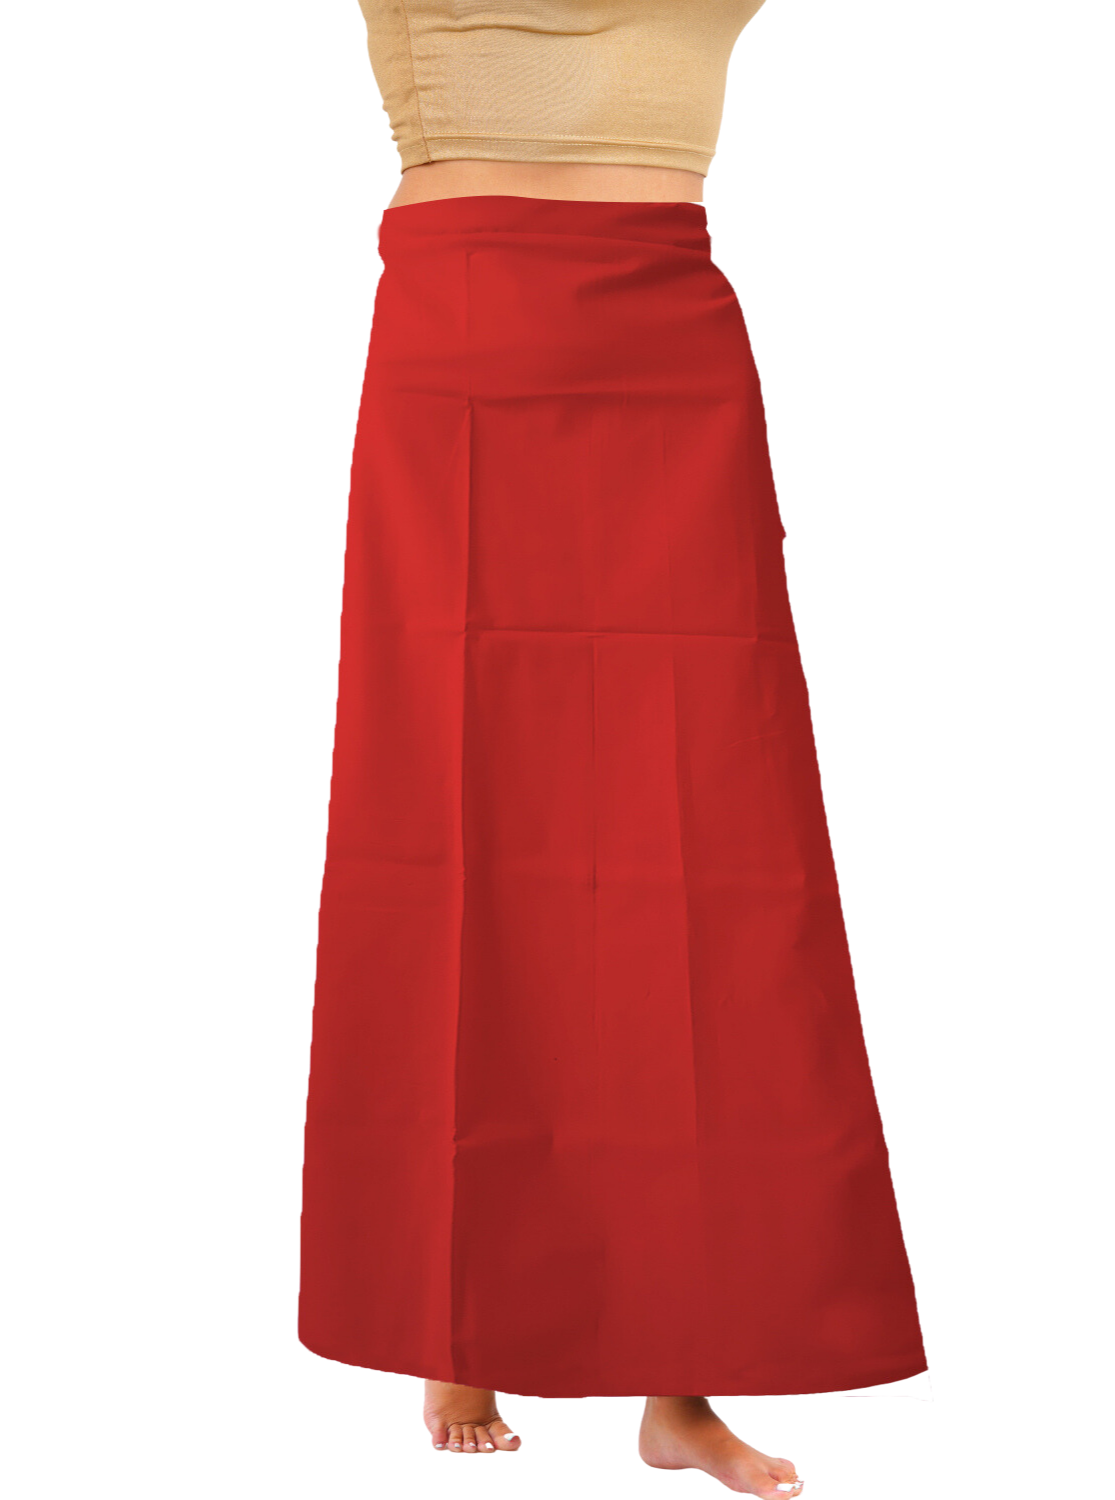 MANGAI Premium Elegant Cotton Petticoats - 8 Part | Premium Branded Women's Cotton Embroidery Petticoats